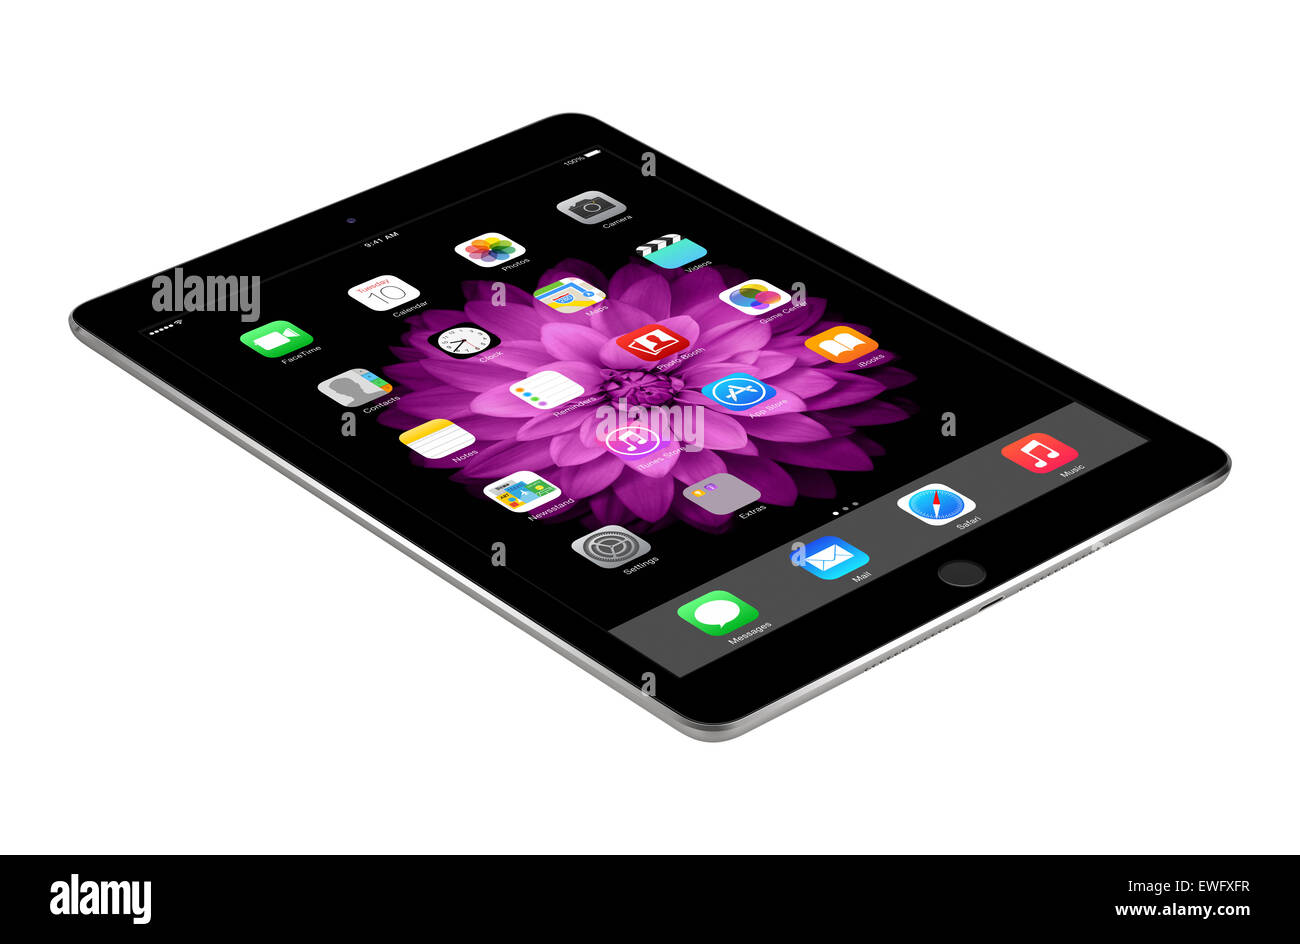 Varna, Bulgarien - 4. Februar 2014: Space Grau Apple iPad Air 2 mit Touch ID Anzeige iOS 8 Homescreen liegt auf der Oberfläche. Stockfoto